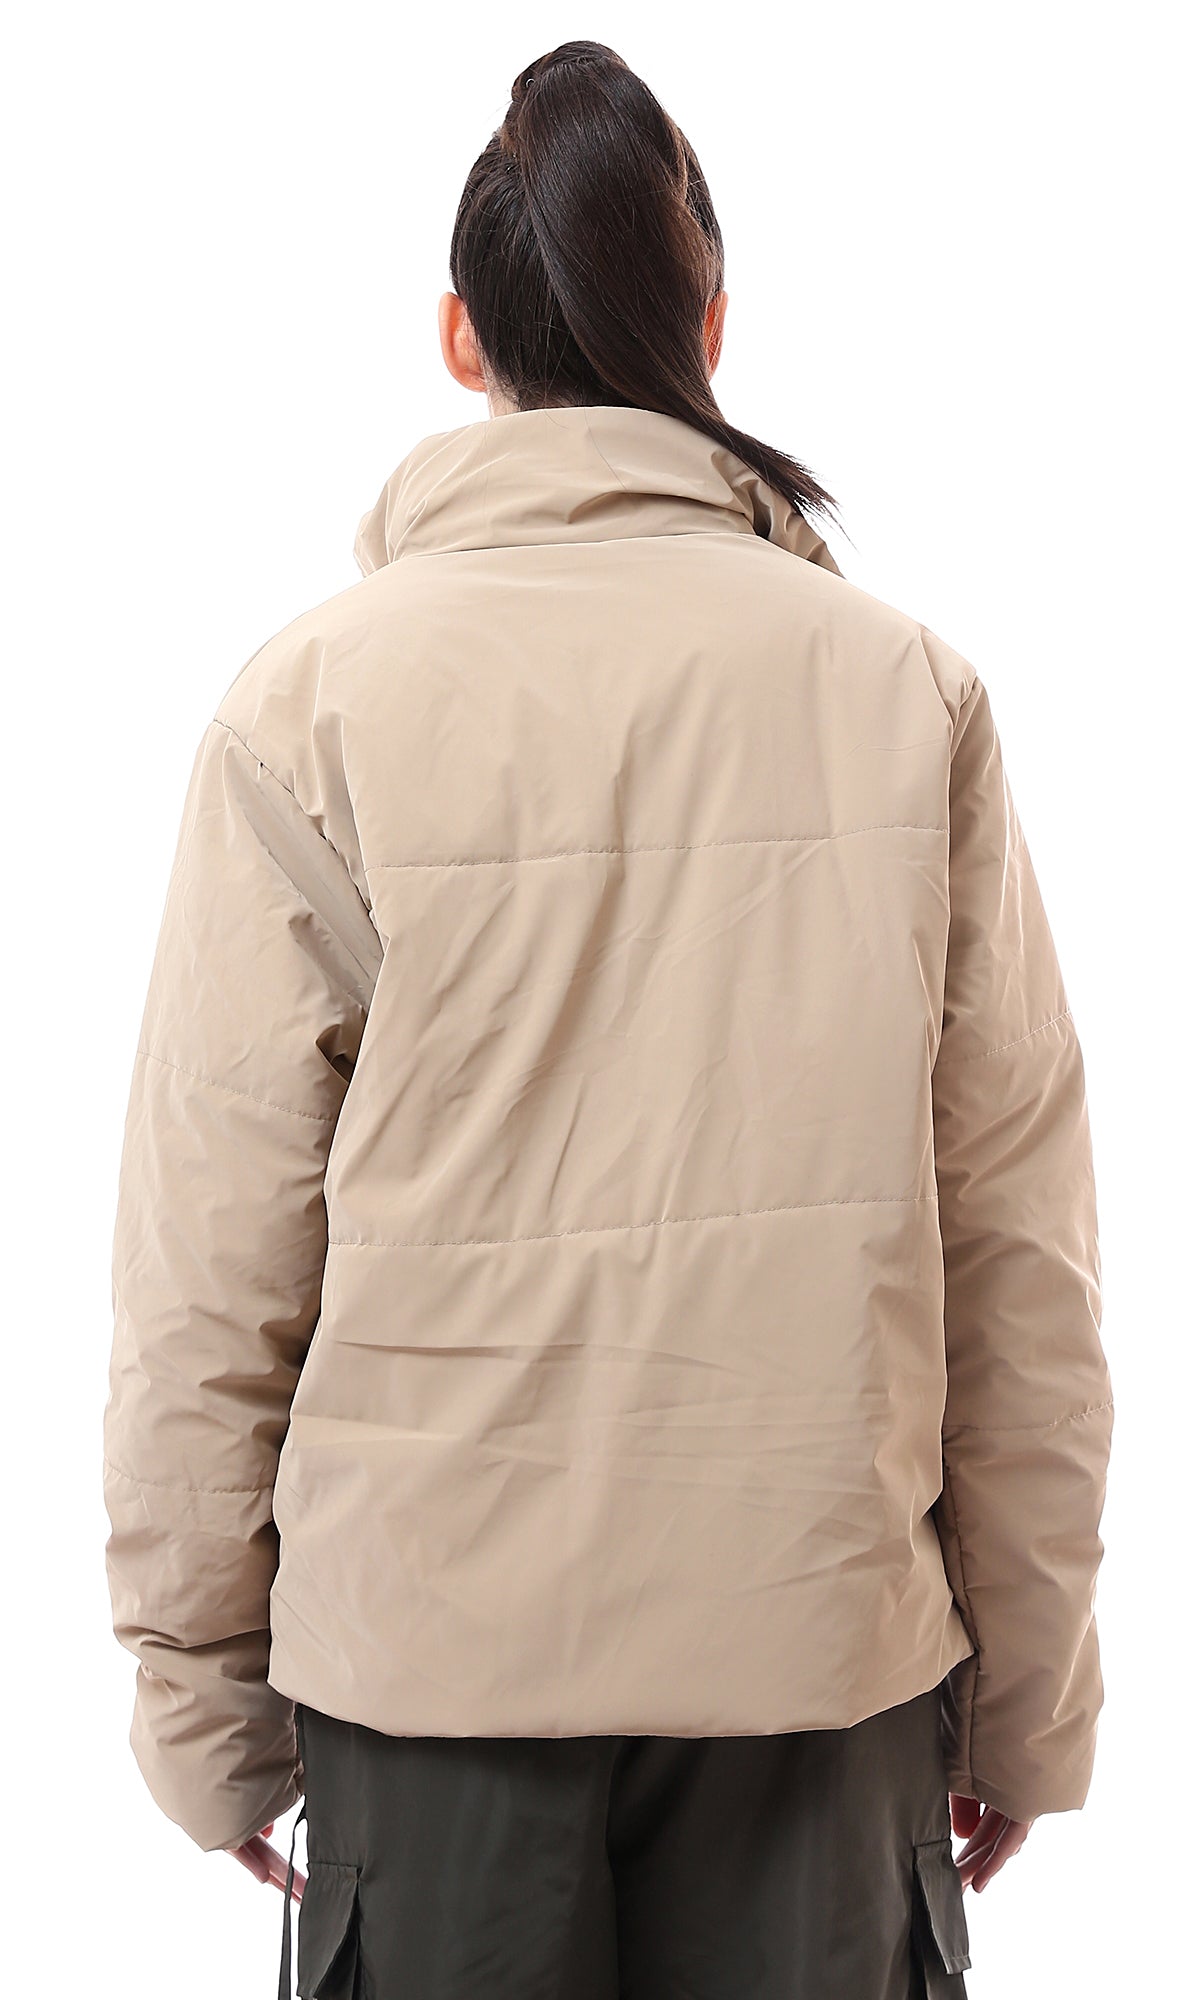 O173799 Zipped Pockets Solid Sand Beige Winter Jacket